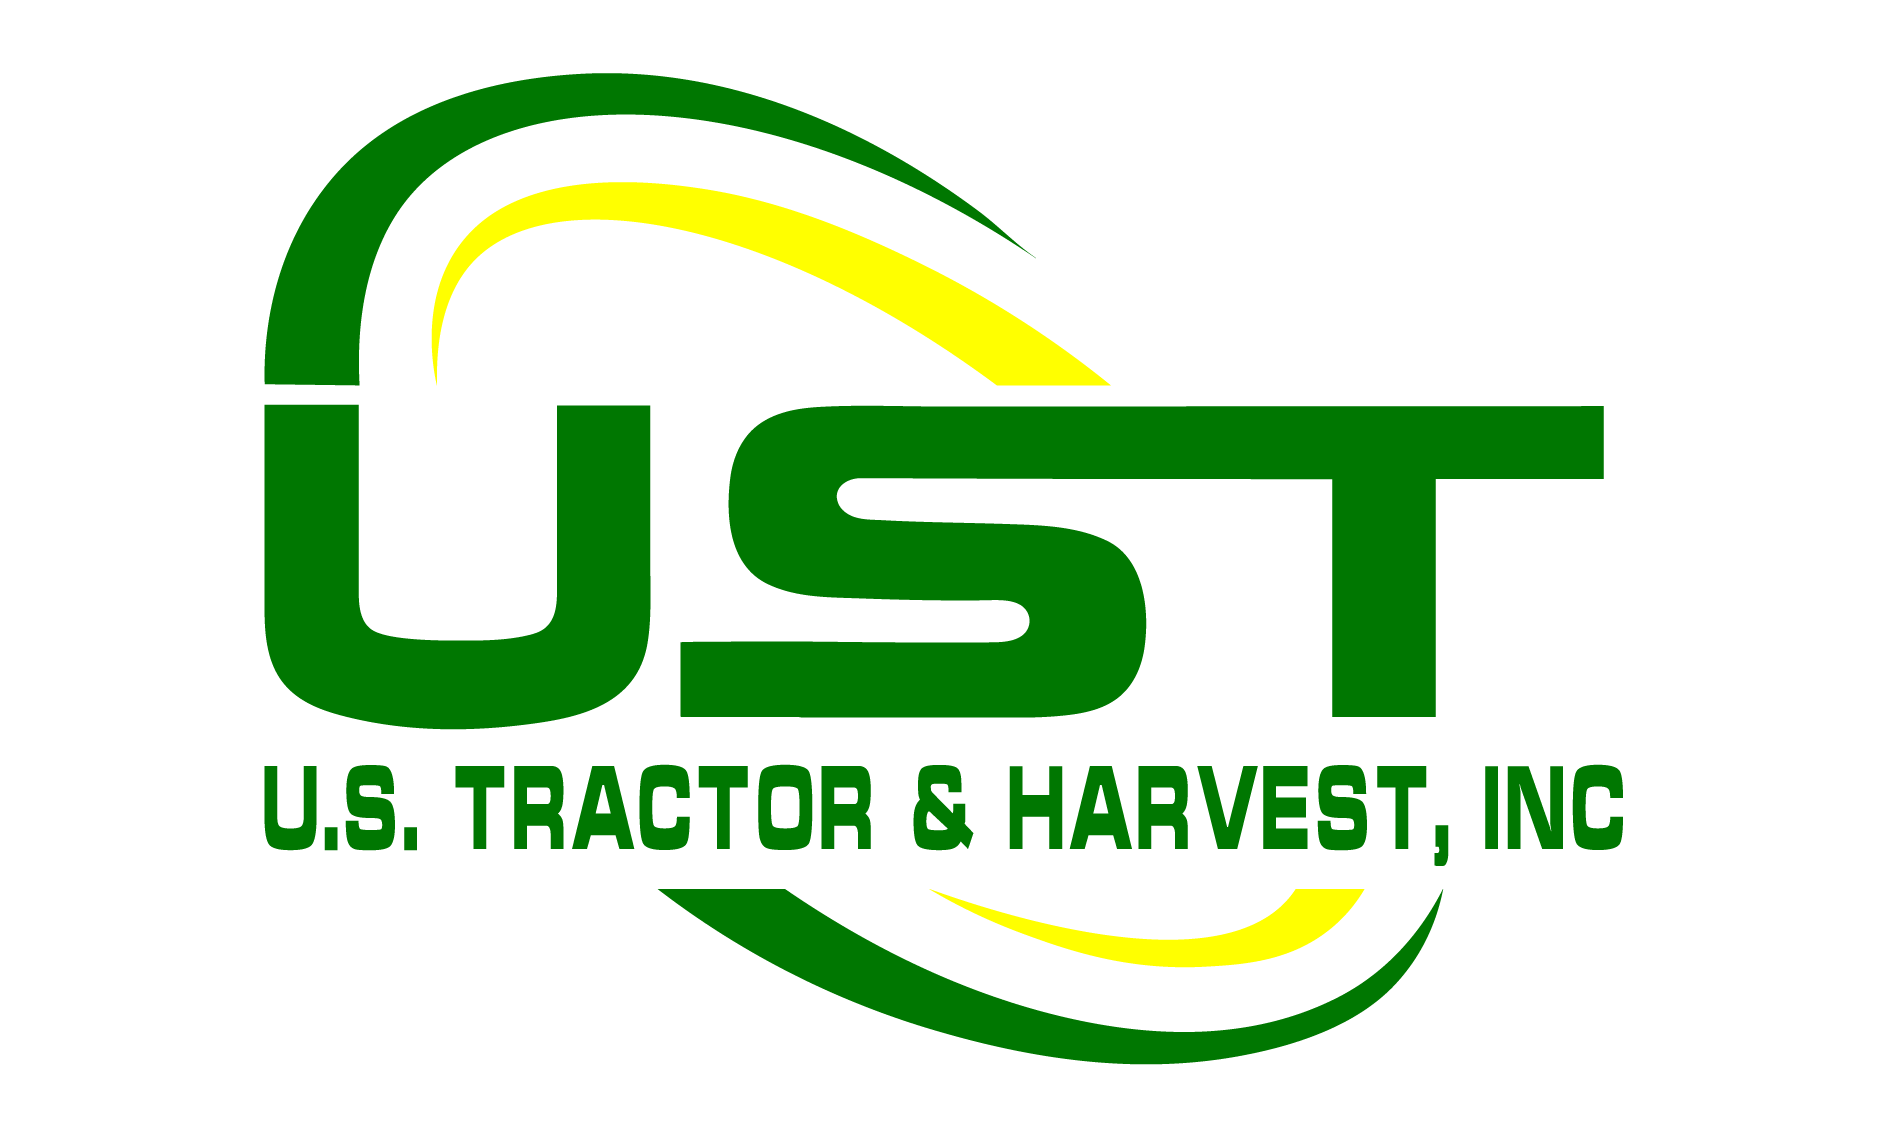 U.S. Tractor & Harvest, Inc